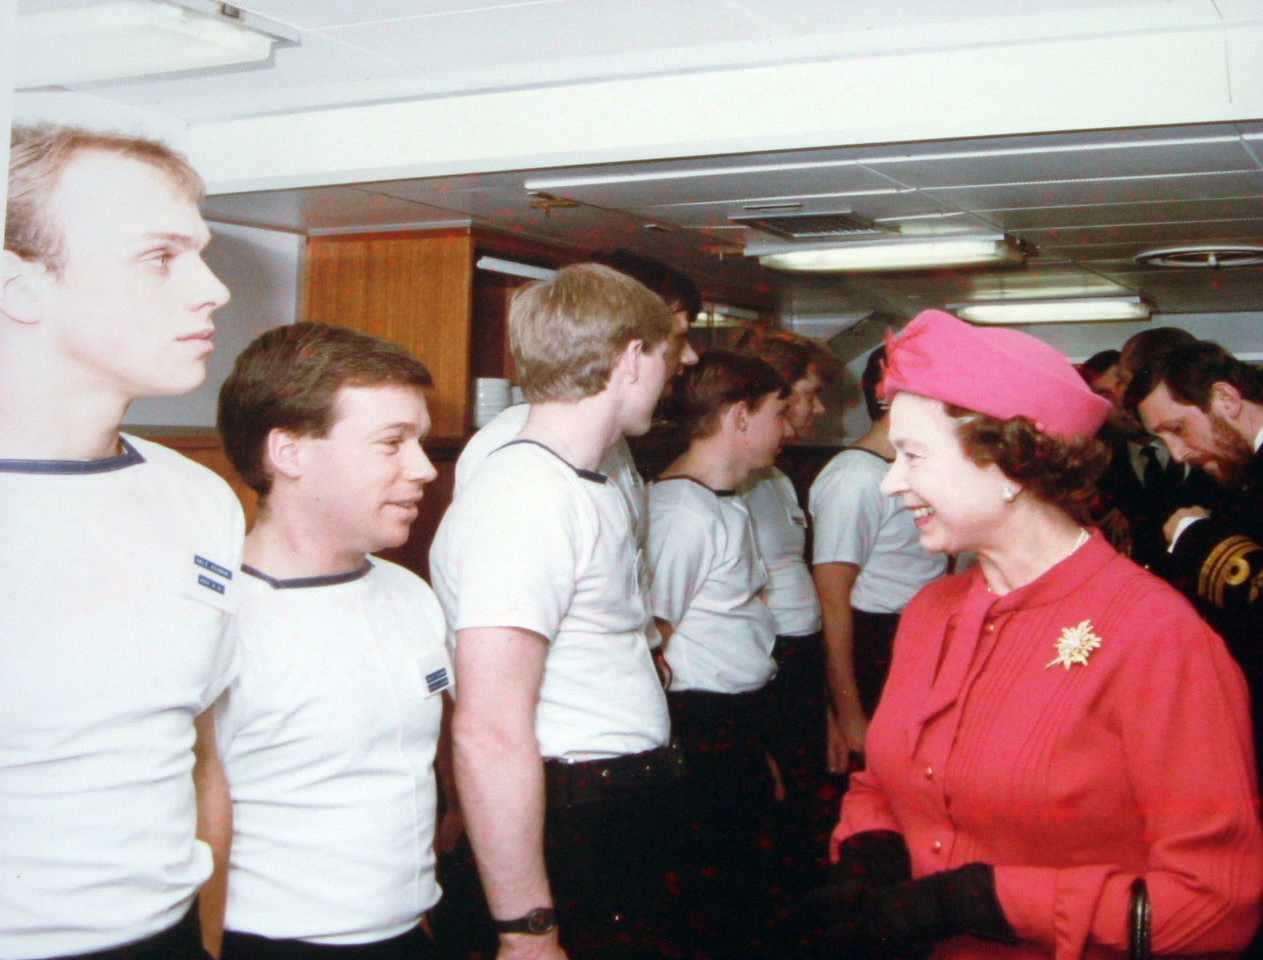 Queen Elizabeth on the HMS Brazen in 1986